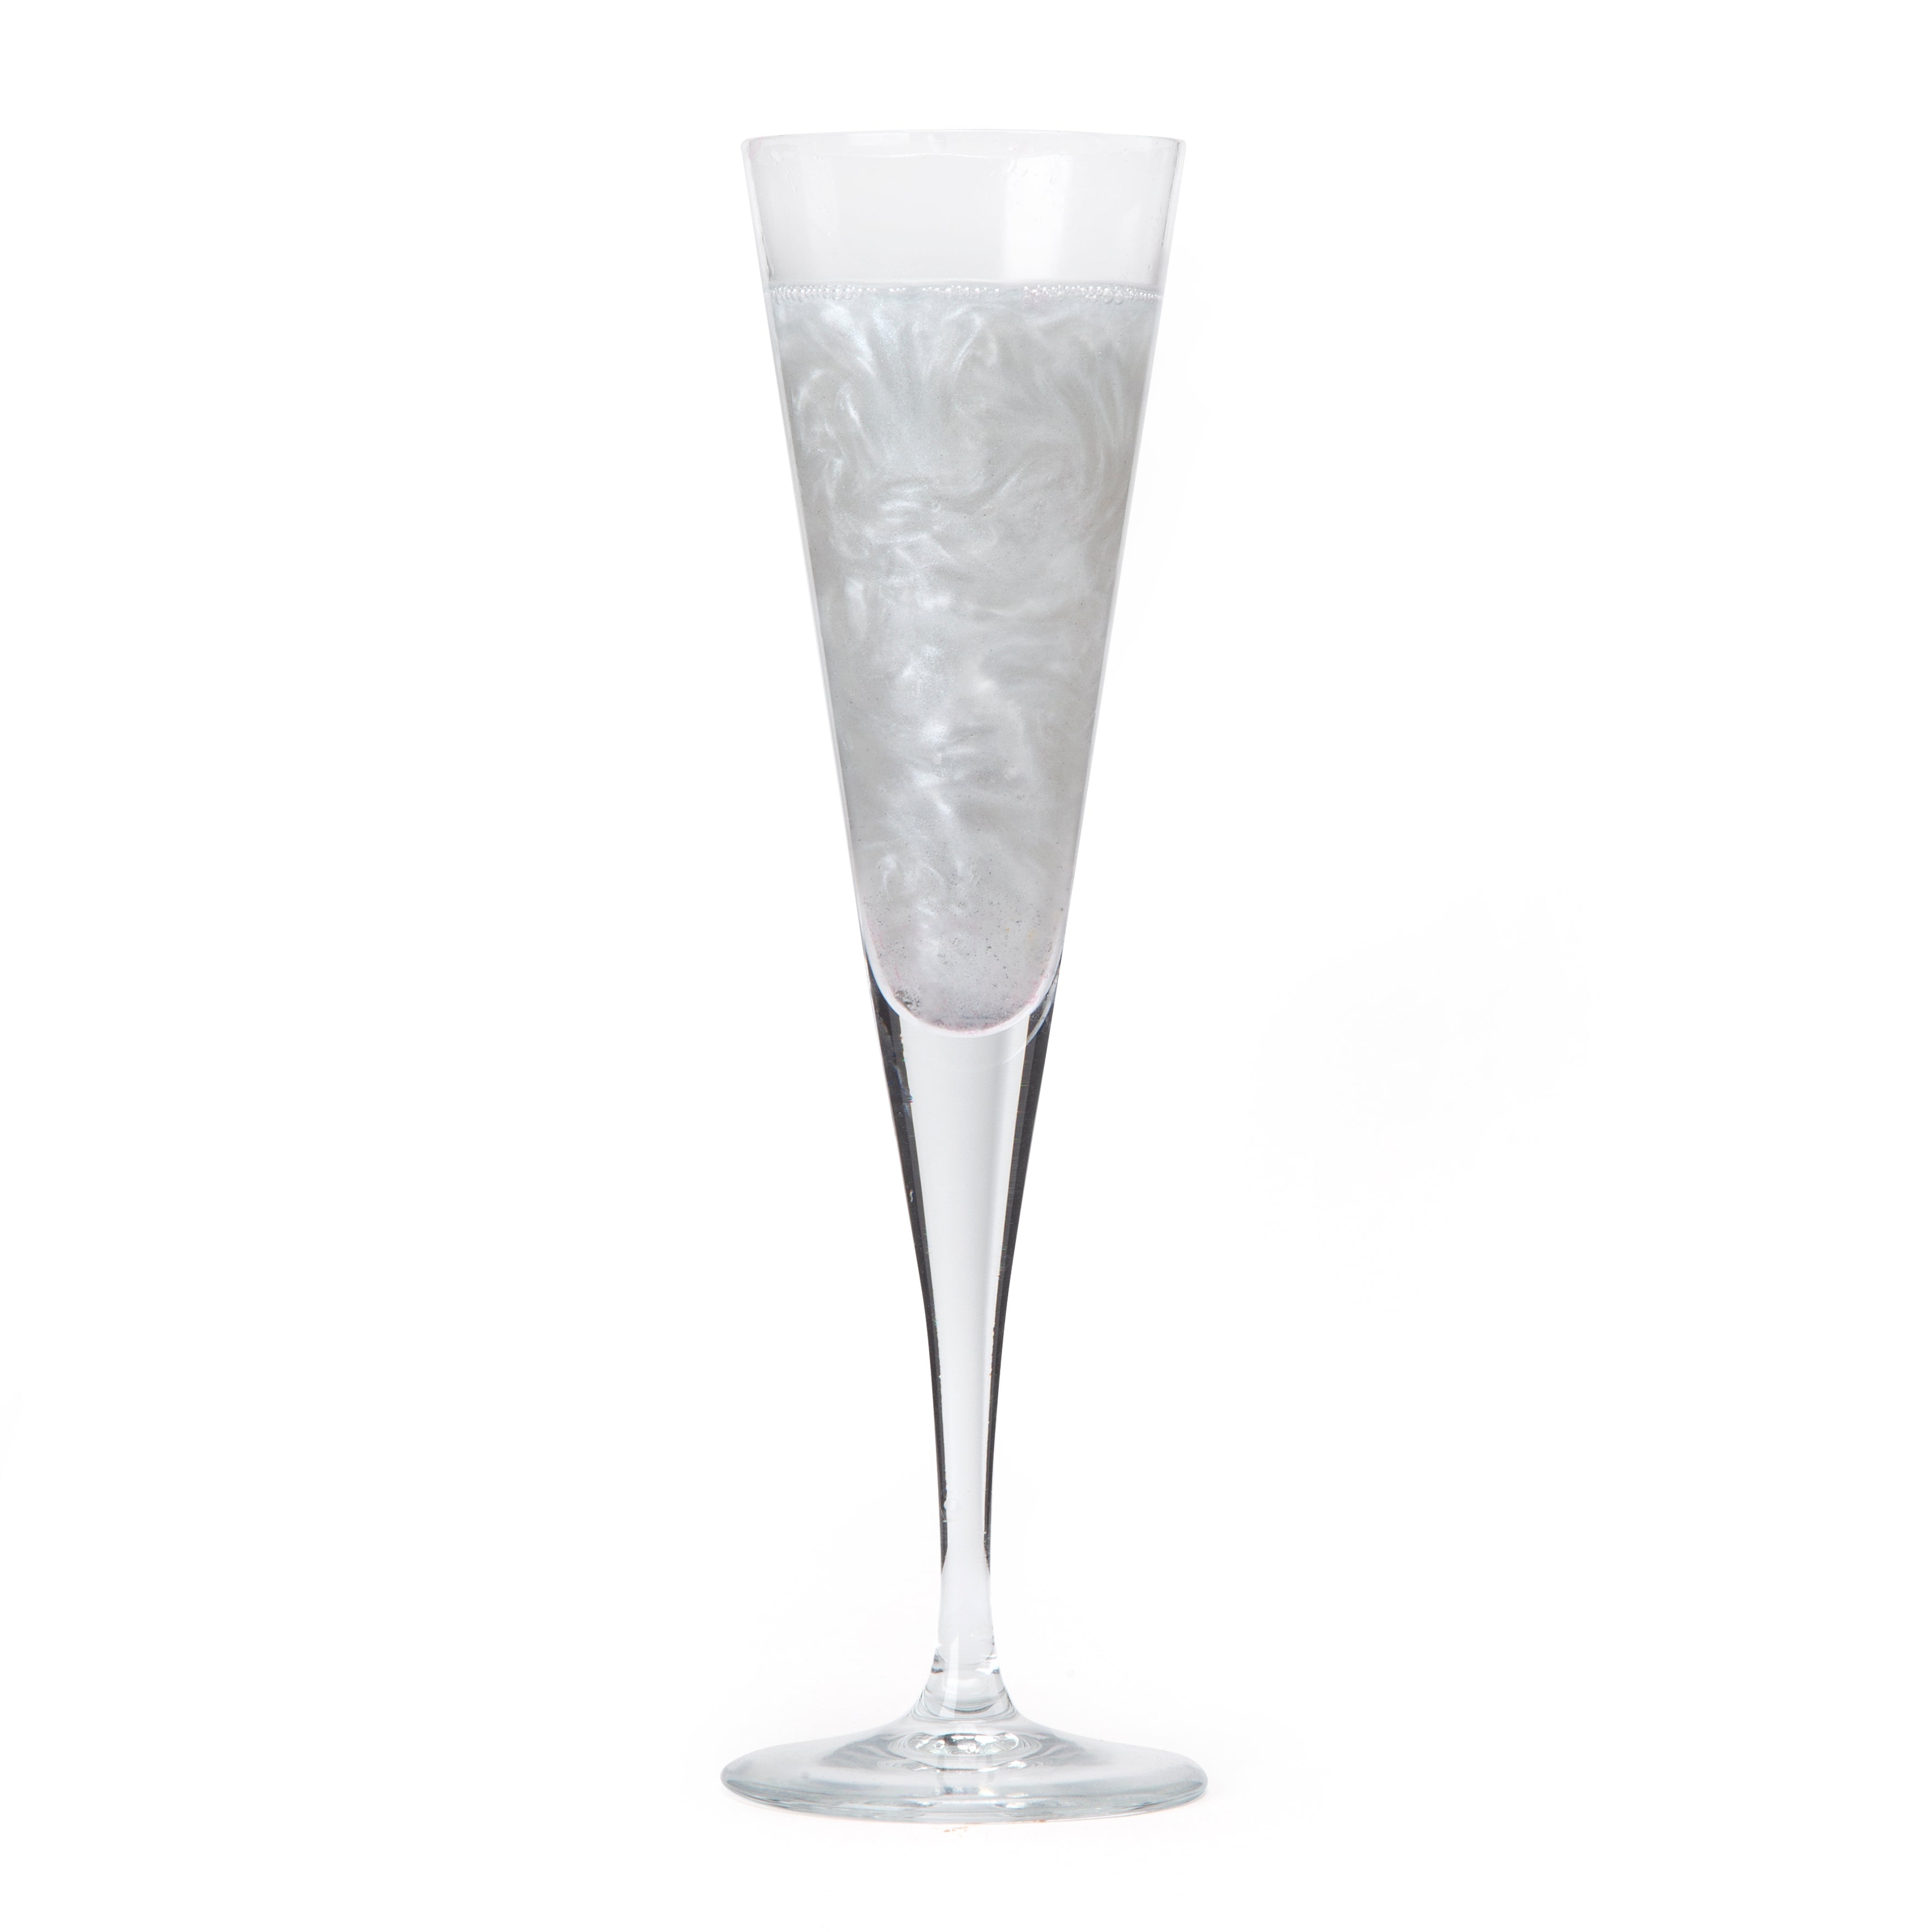 Silver Ice Silk Shimmer 2.5g pot - serves 25-30 flutes of fizz